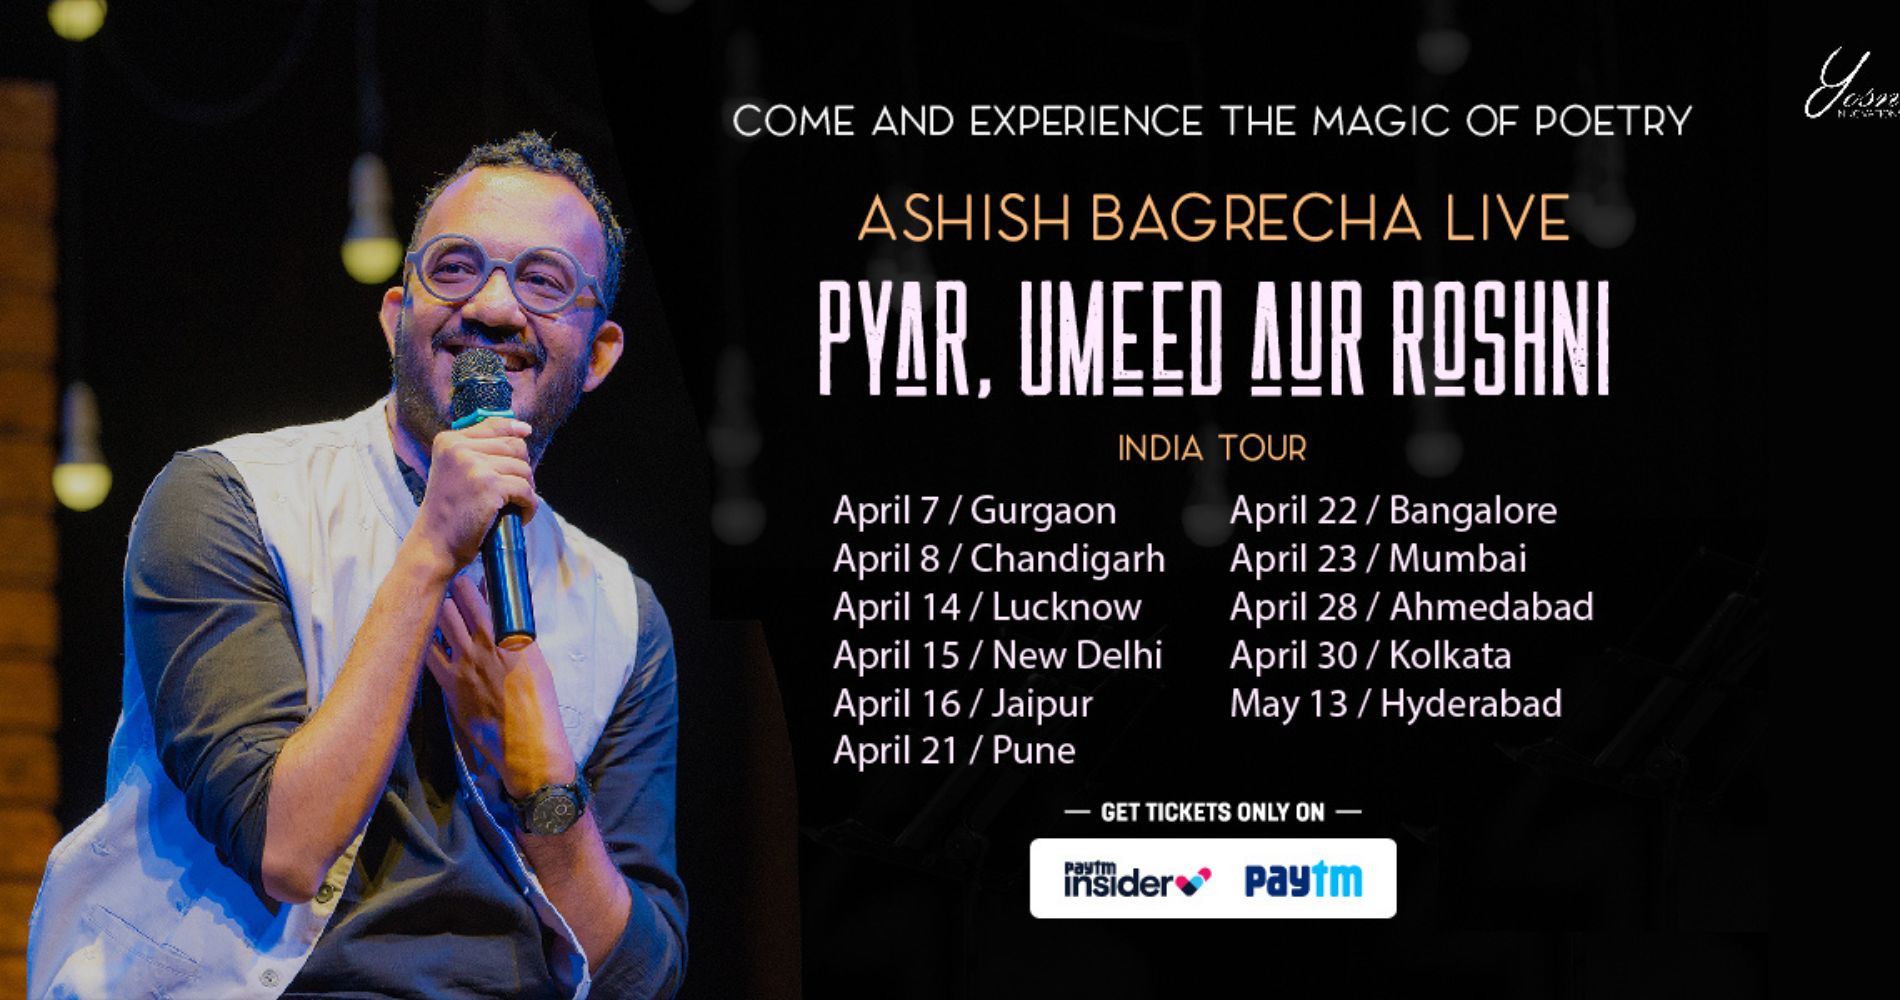 Paytm Insider Presents: Ashish Bagrecha's 'Pyar, Umeed Aur Roshni' India